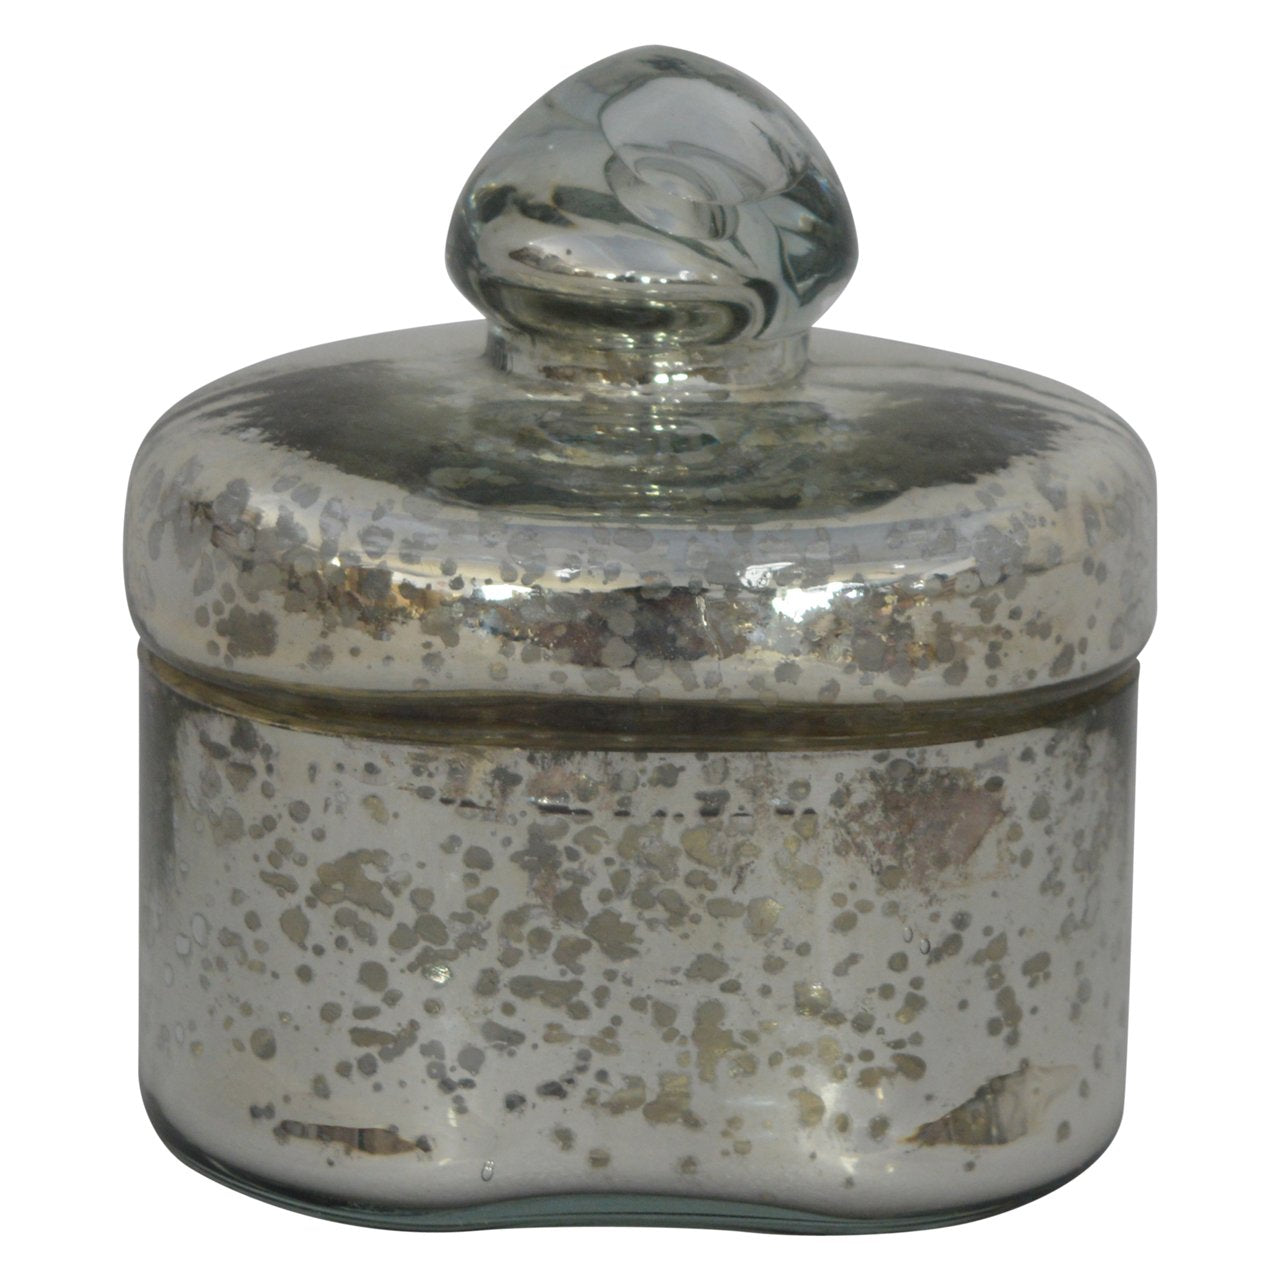 Cleopatra's Handcrafted Antique Jar - Broxle